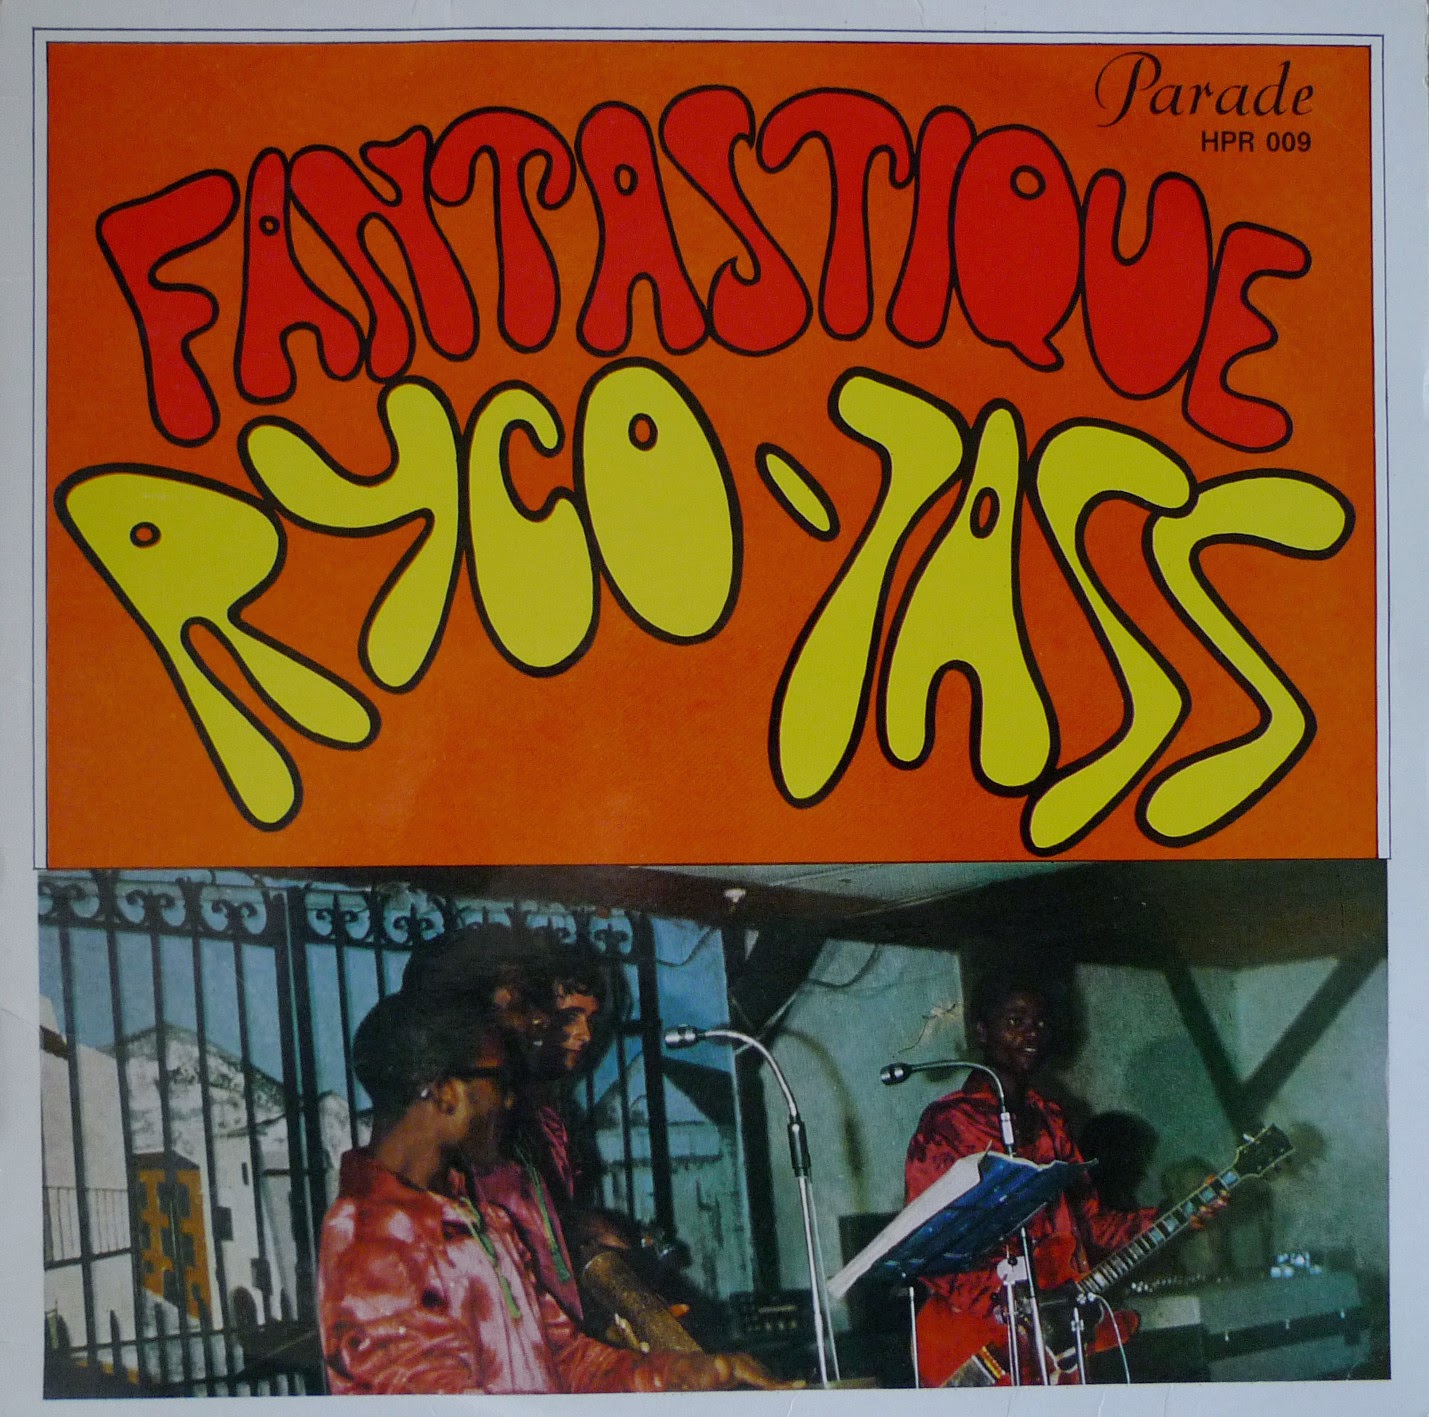  Fantastique Ryco jazz (1970) Fantastic+ry+co+A